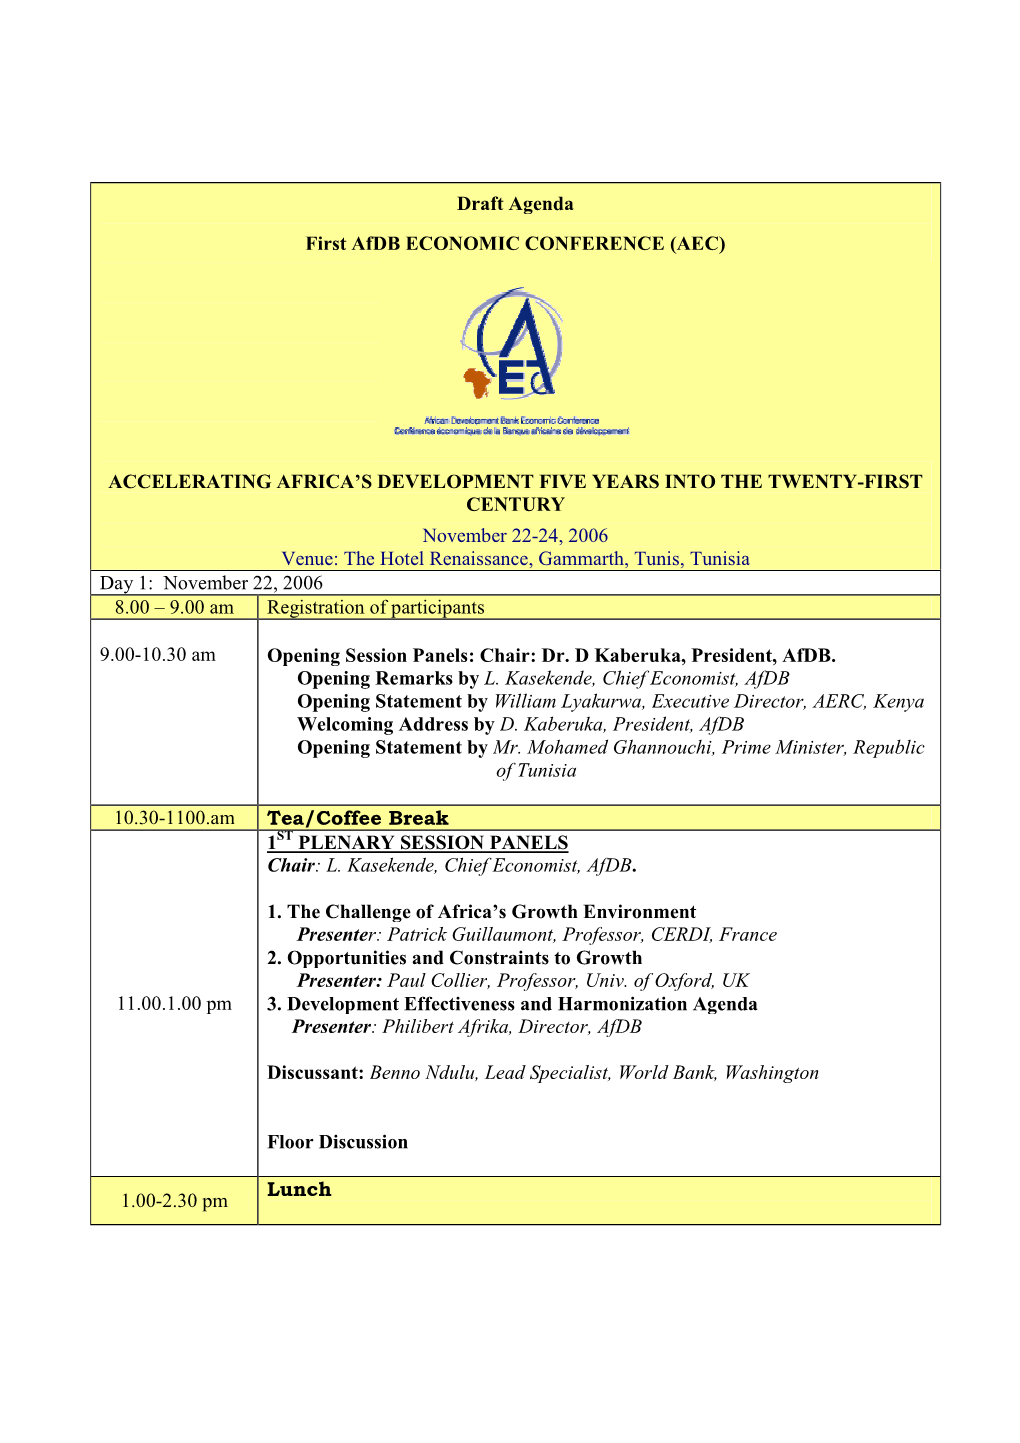 Draft Agenda First Afdb ECONOMIC CONFERENCE (AEC)